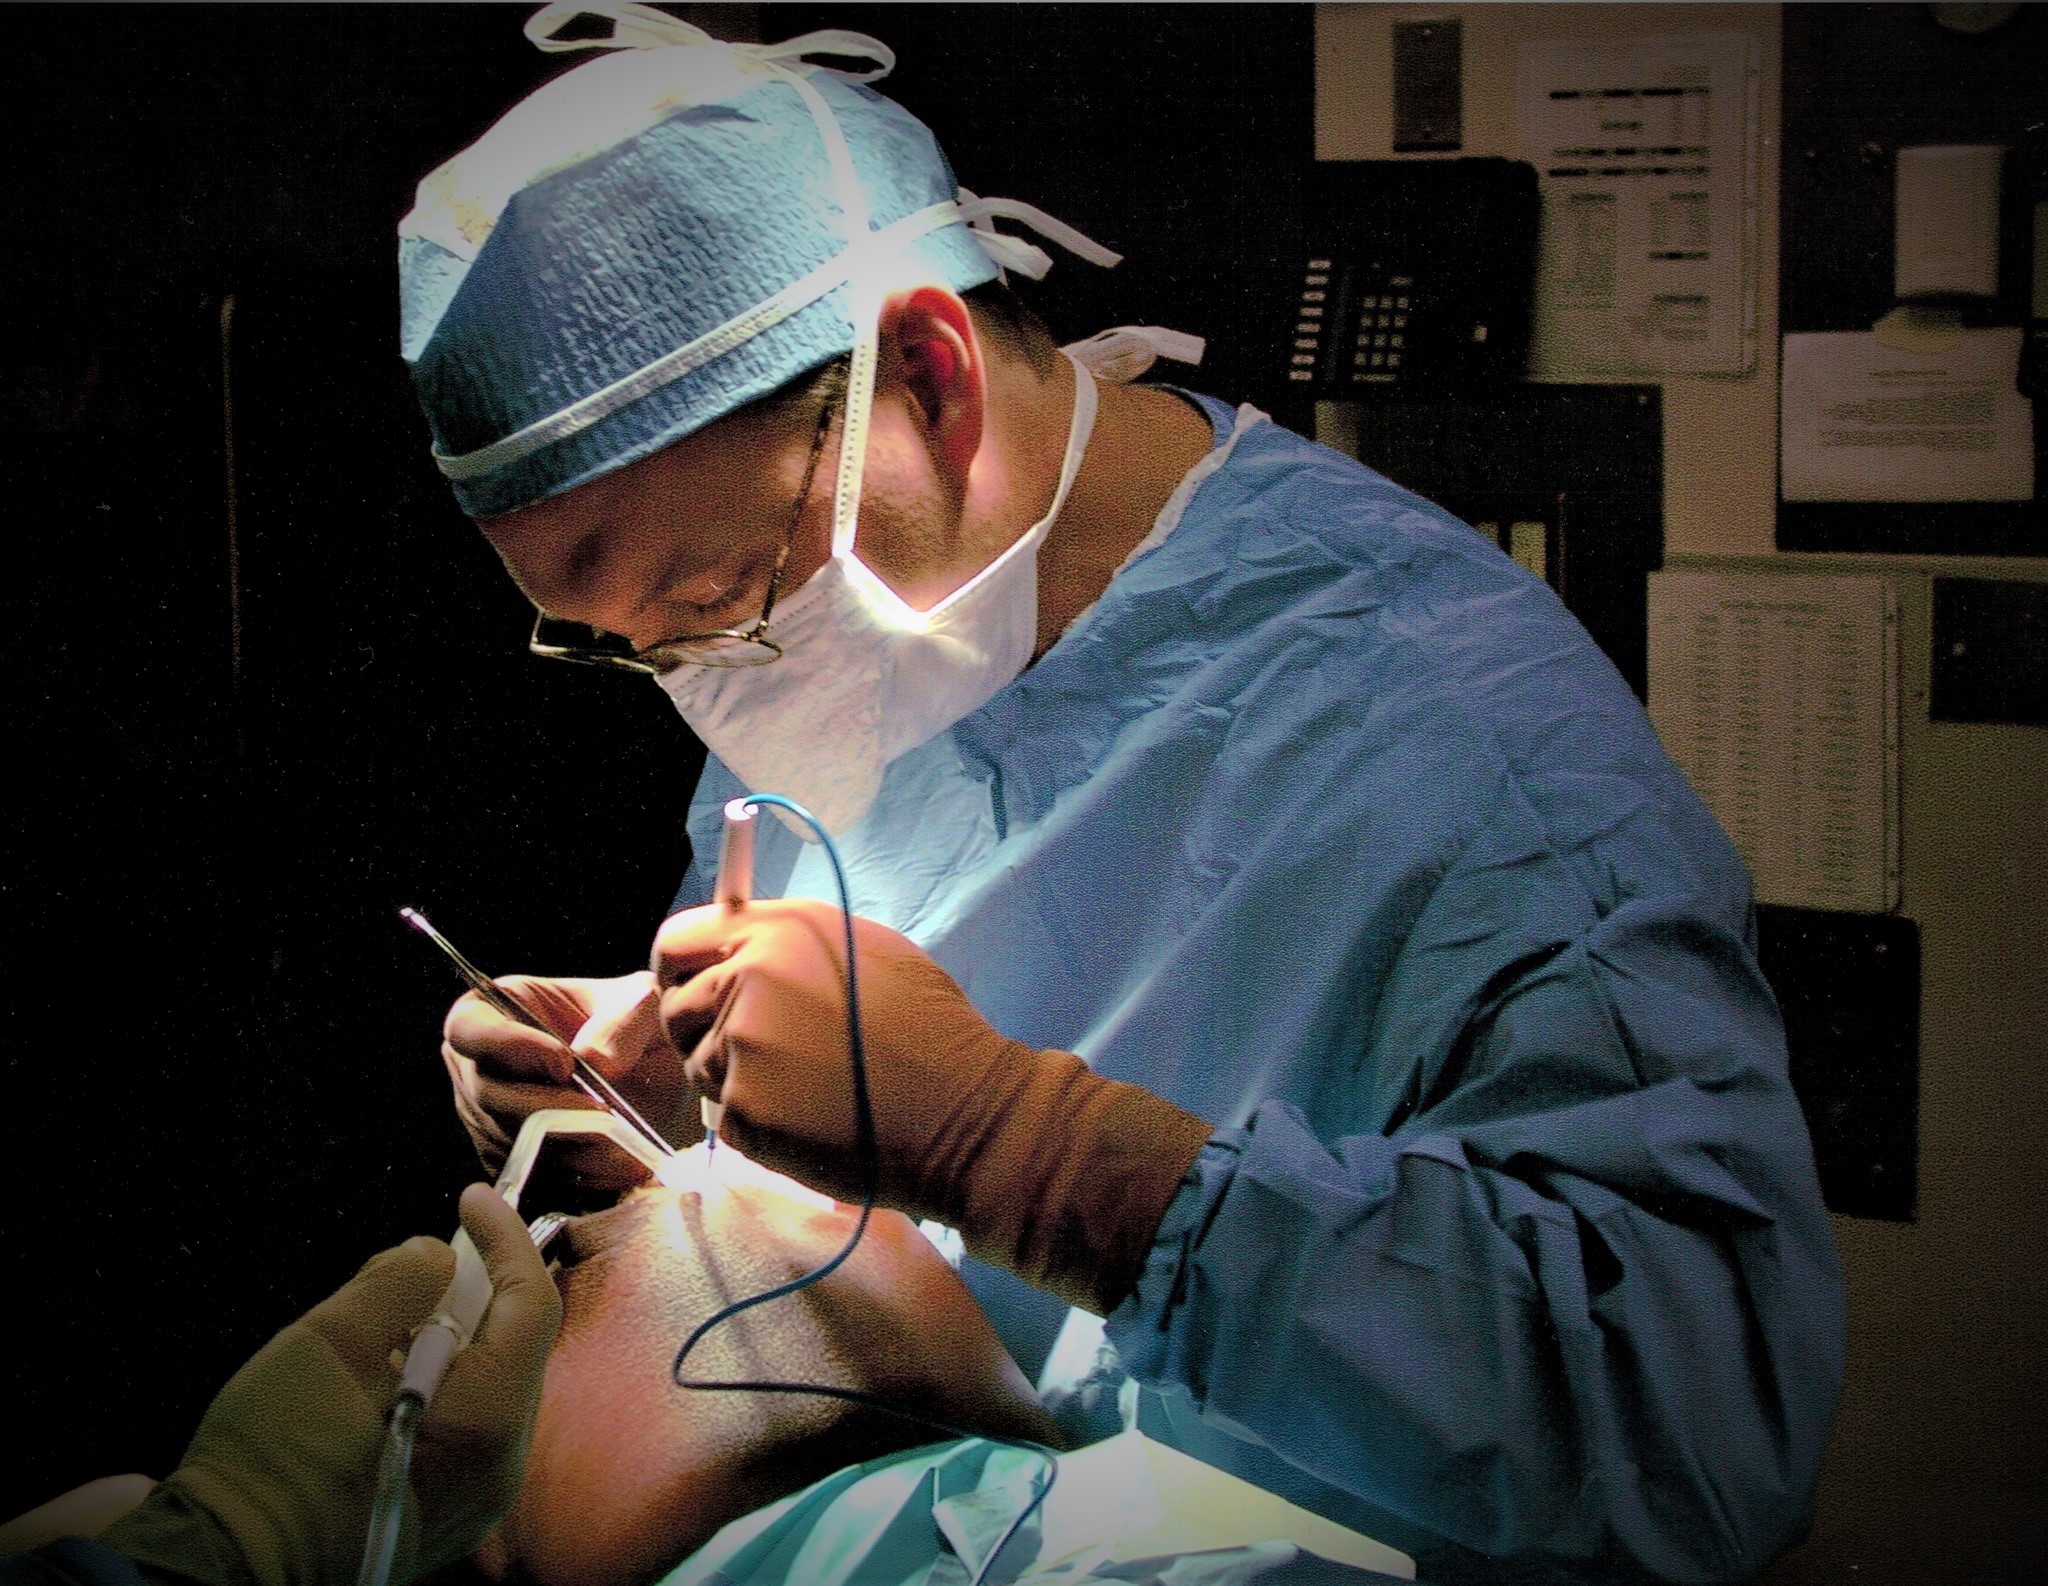 Darrin Eakins of Wilmington, NC Shares 6 Things for Choosing an Orthopedic Surgeon